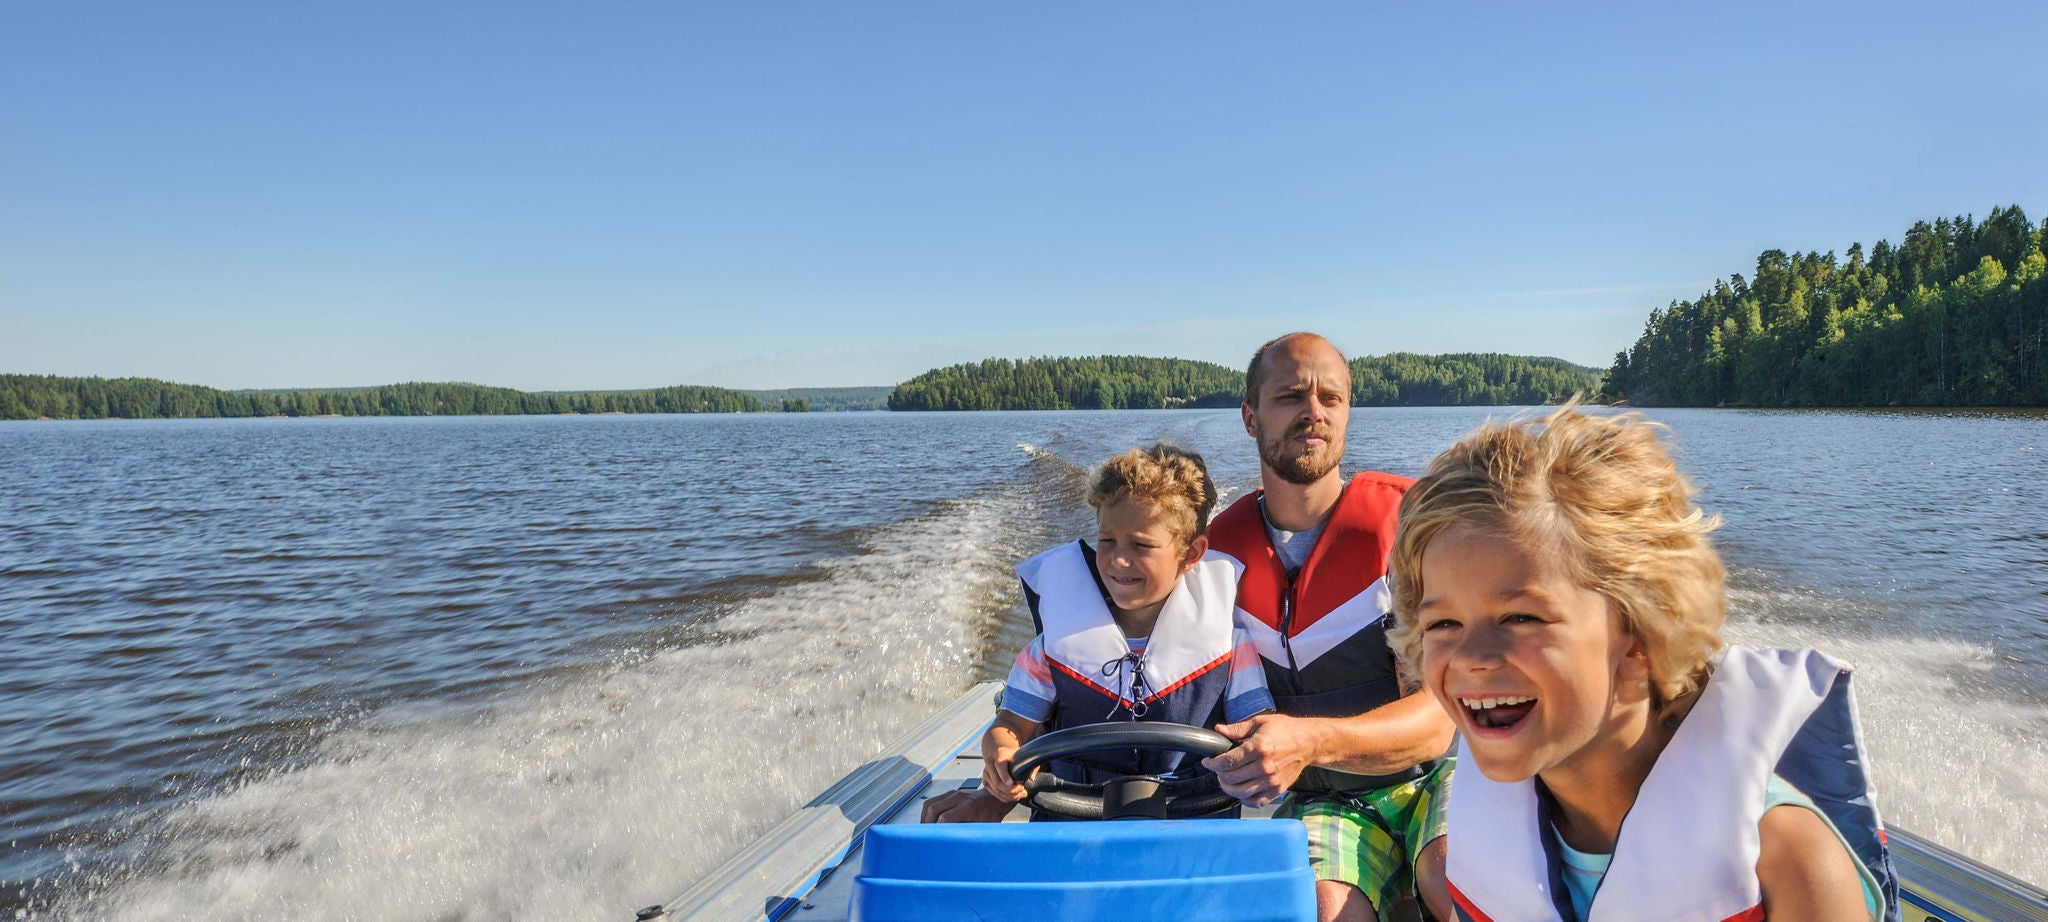 Family considers getting boat loan